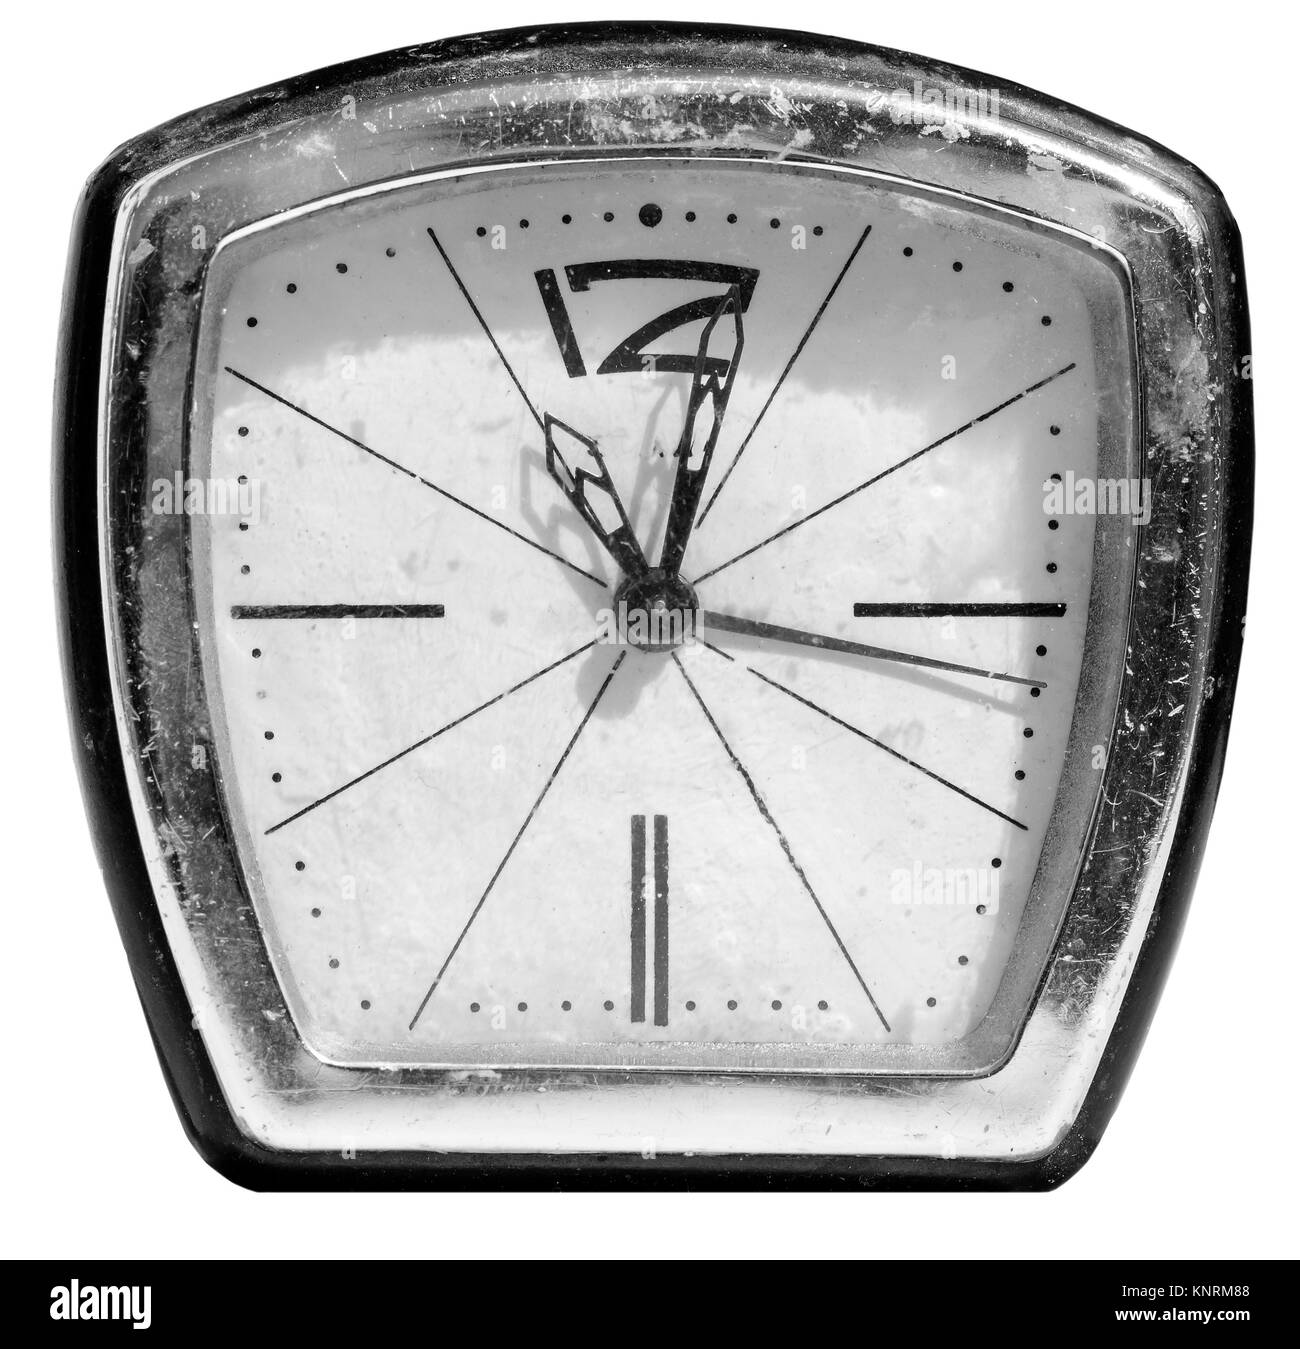 old bracket clock, vintage mechanical USSR alarm clock Stock Photo